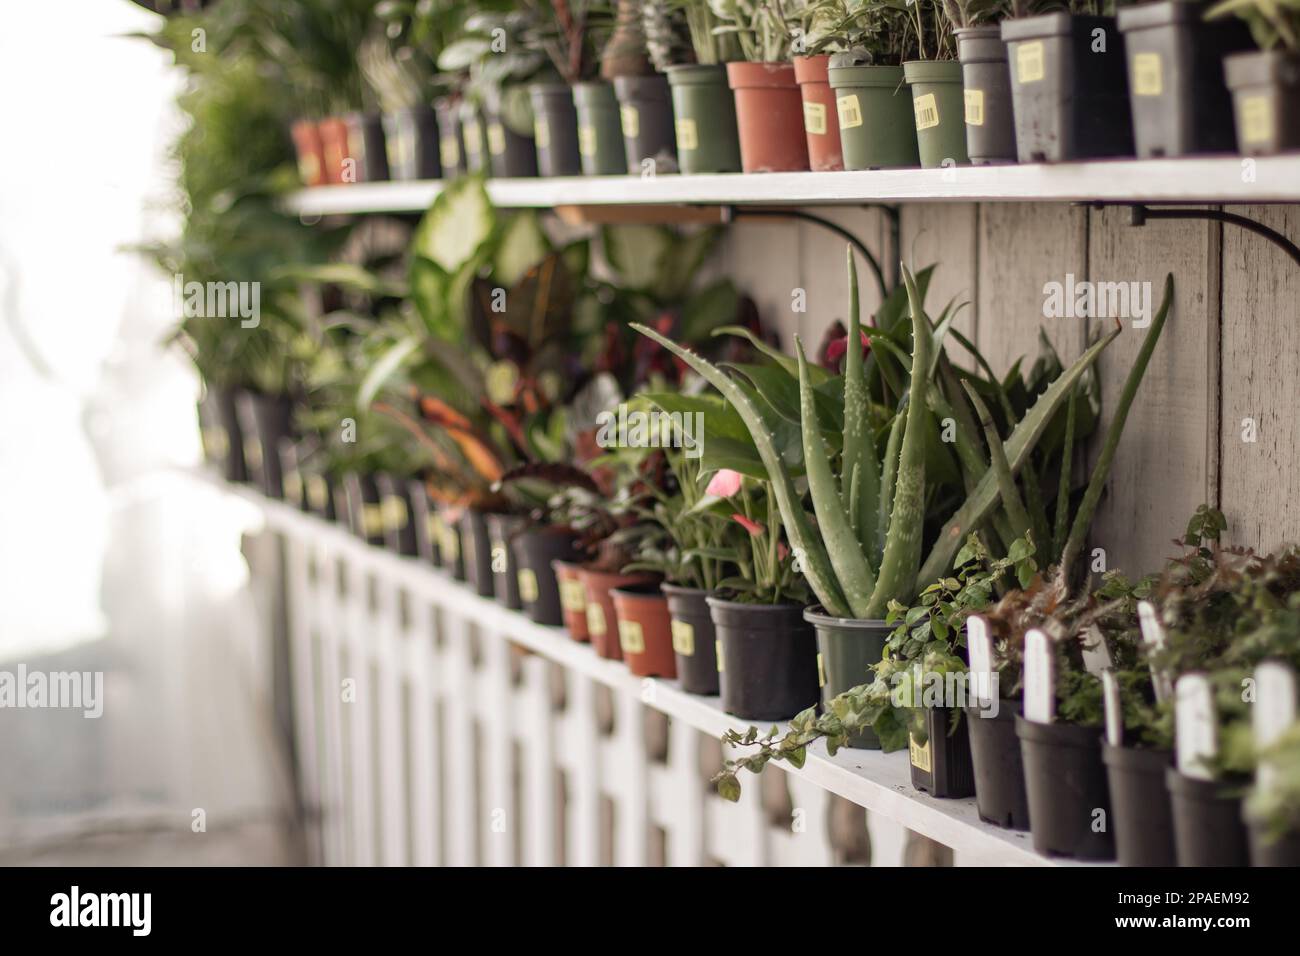 shelves of an assortment of houseplants. Aloe Vera, Snake Plants, ferns, Pilea, etc. Stock Photo